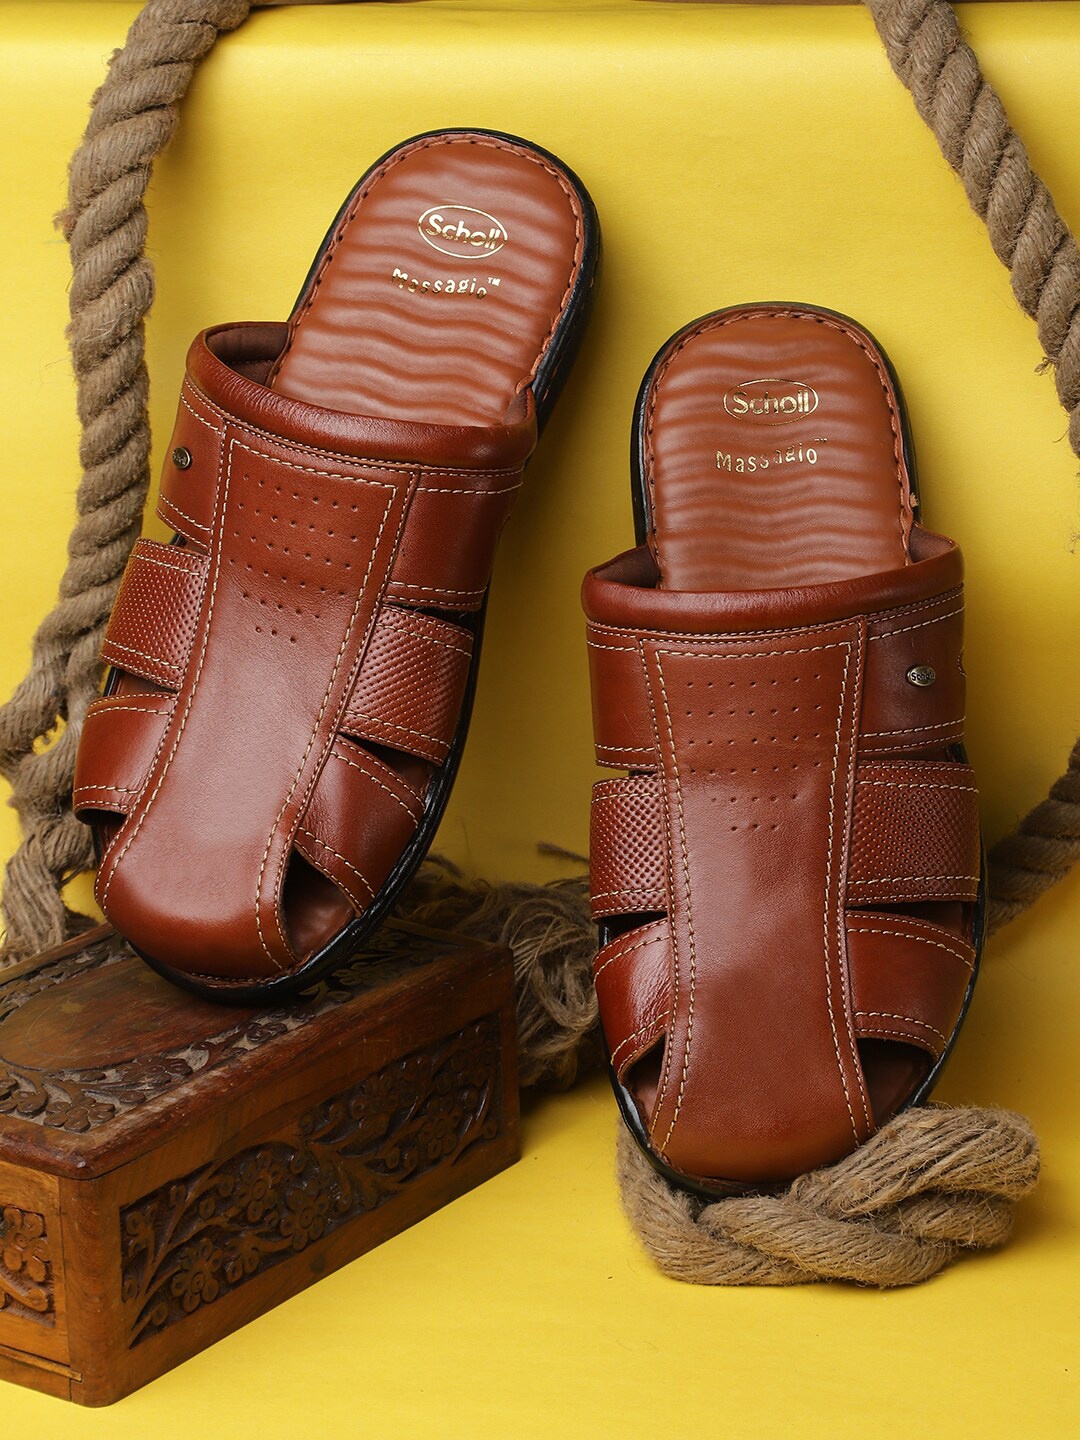 

Scholl Leather Fisherman Sandals, Tan